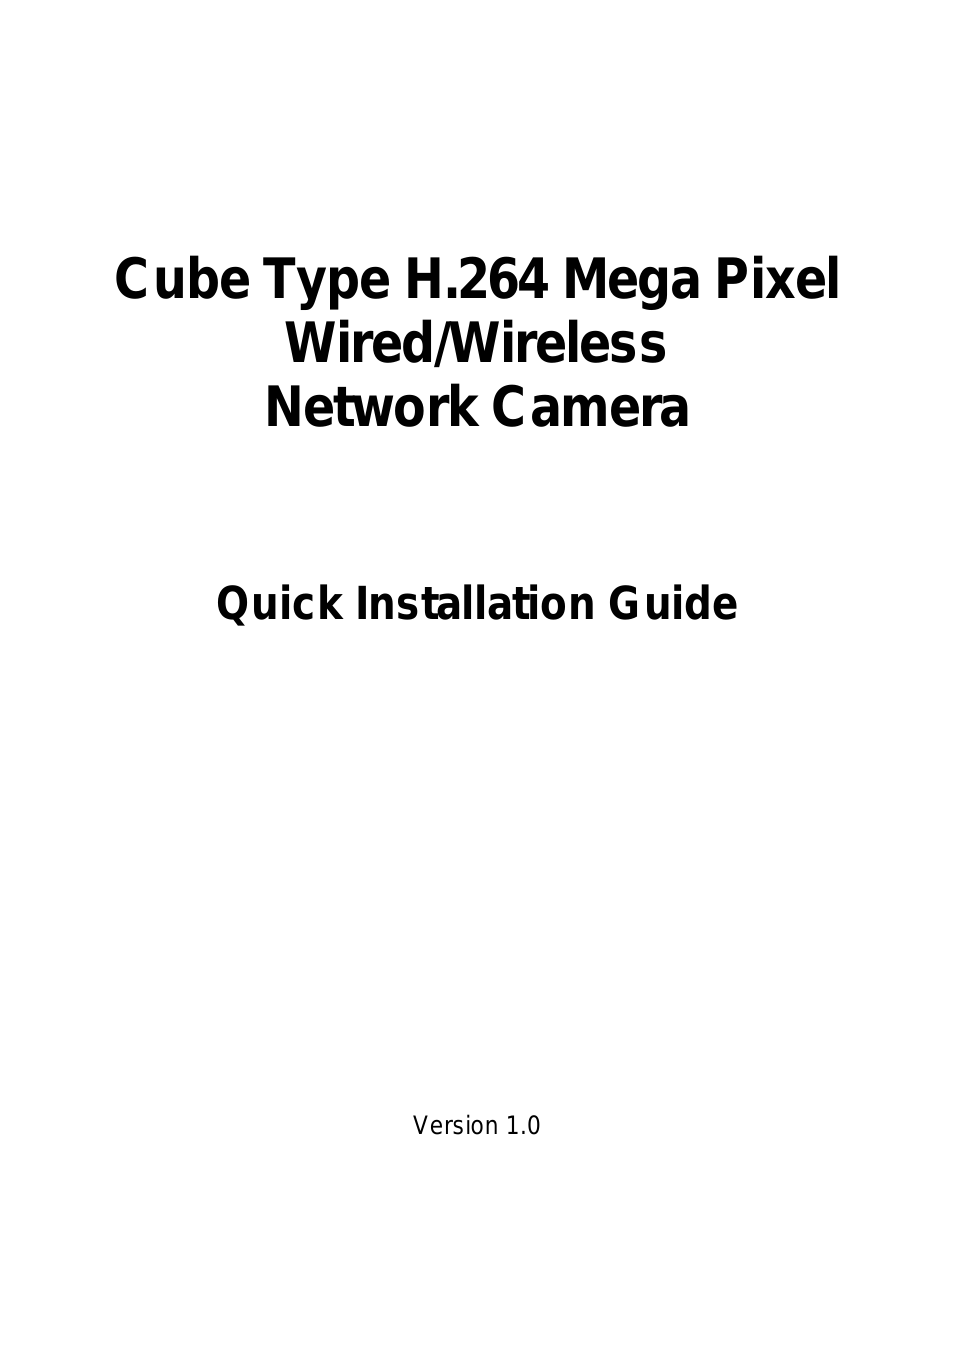 ICS2330 Quick Installation Guide